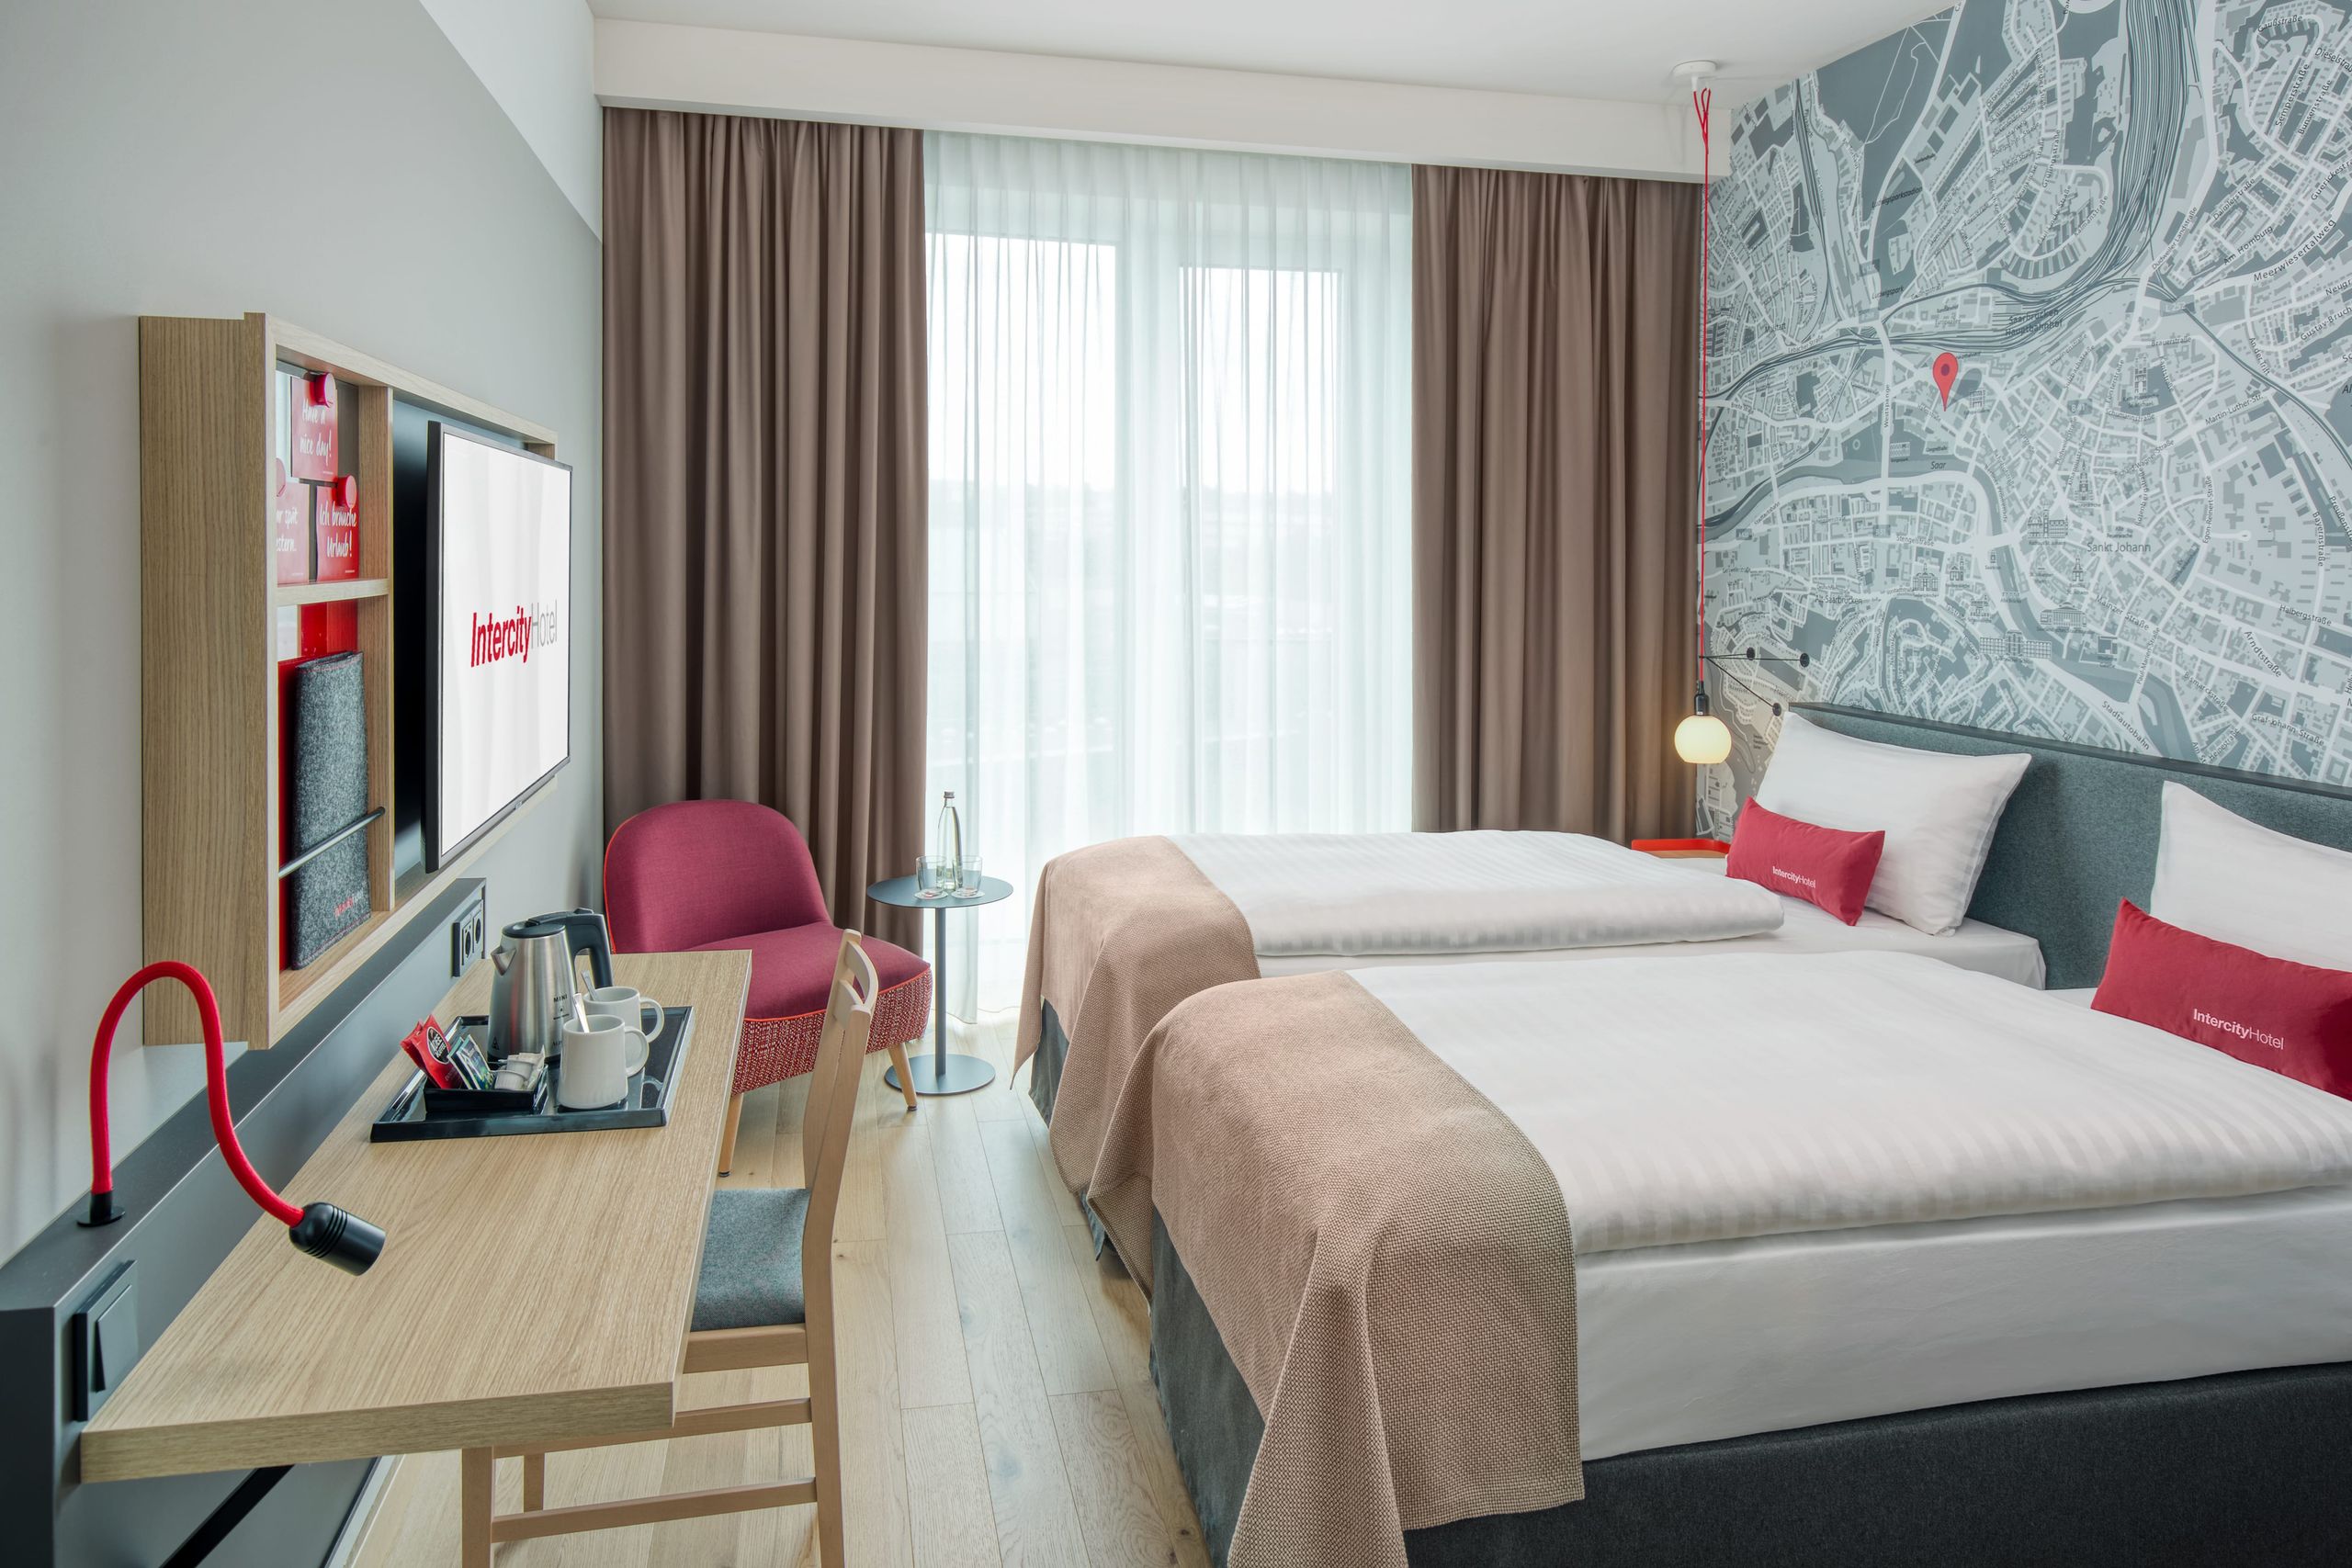 Hôtel à Sarrebruck | IntercityHotel Sarrebruck - Chambre supérieure avec lits séparés